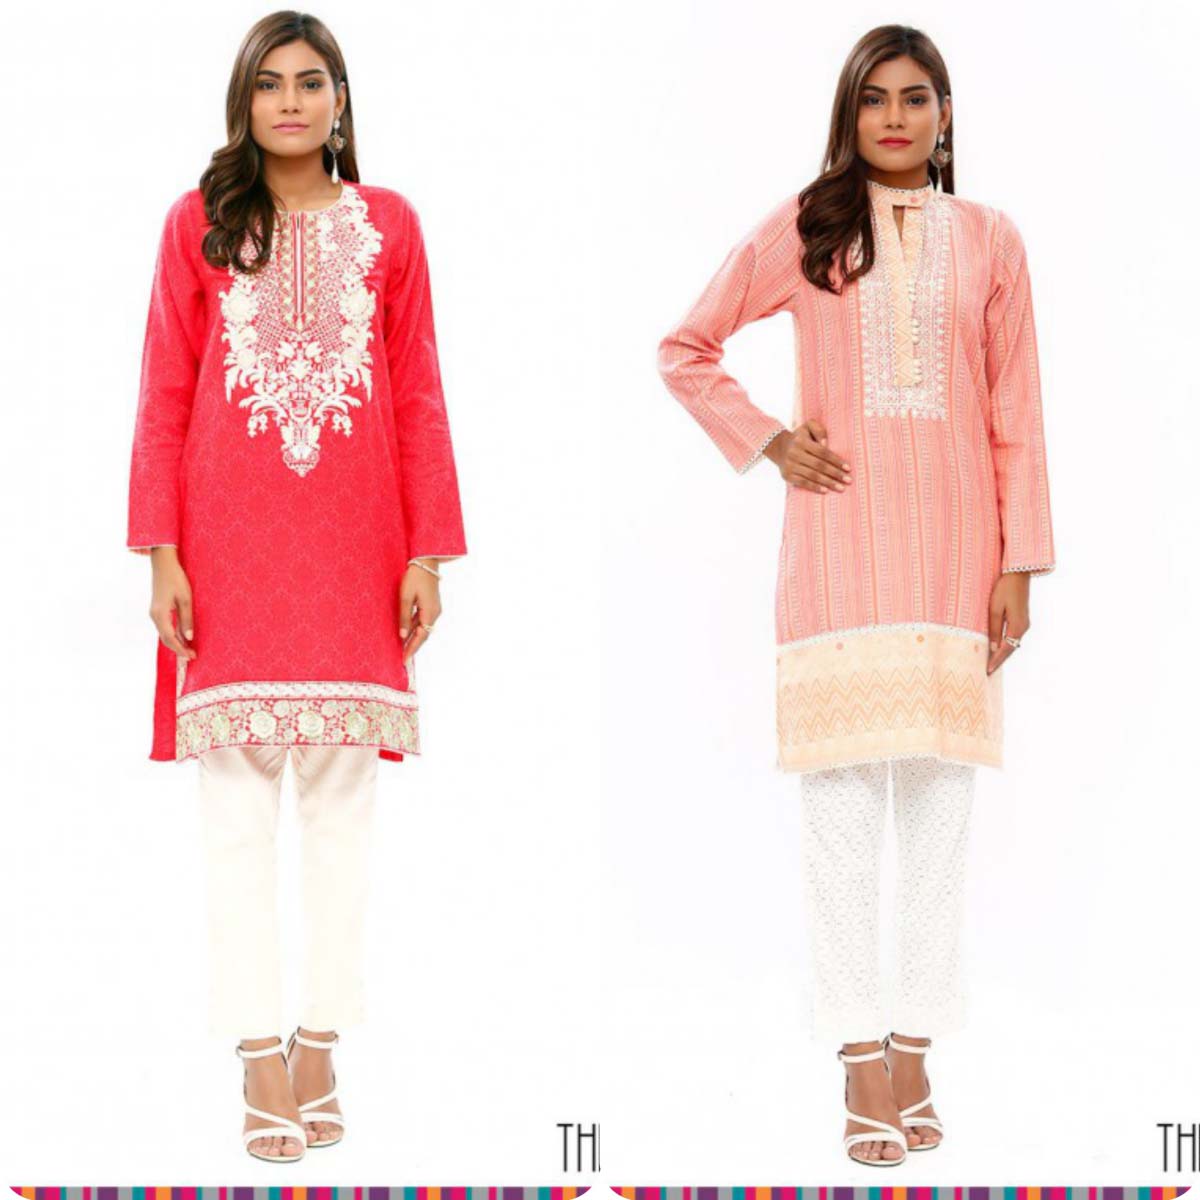 Stylish Embroidered Eid KurtisTunics for Girls By THREDZ 2016-2016 Complete Look-Book (1)